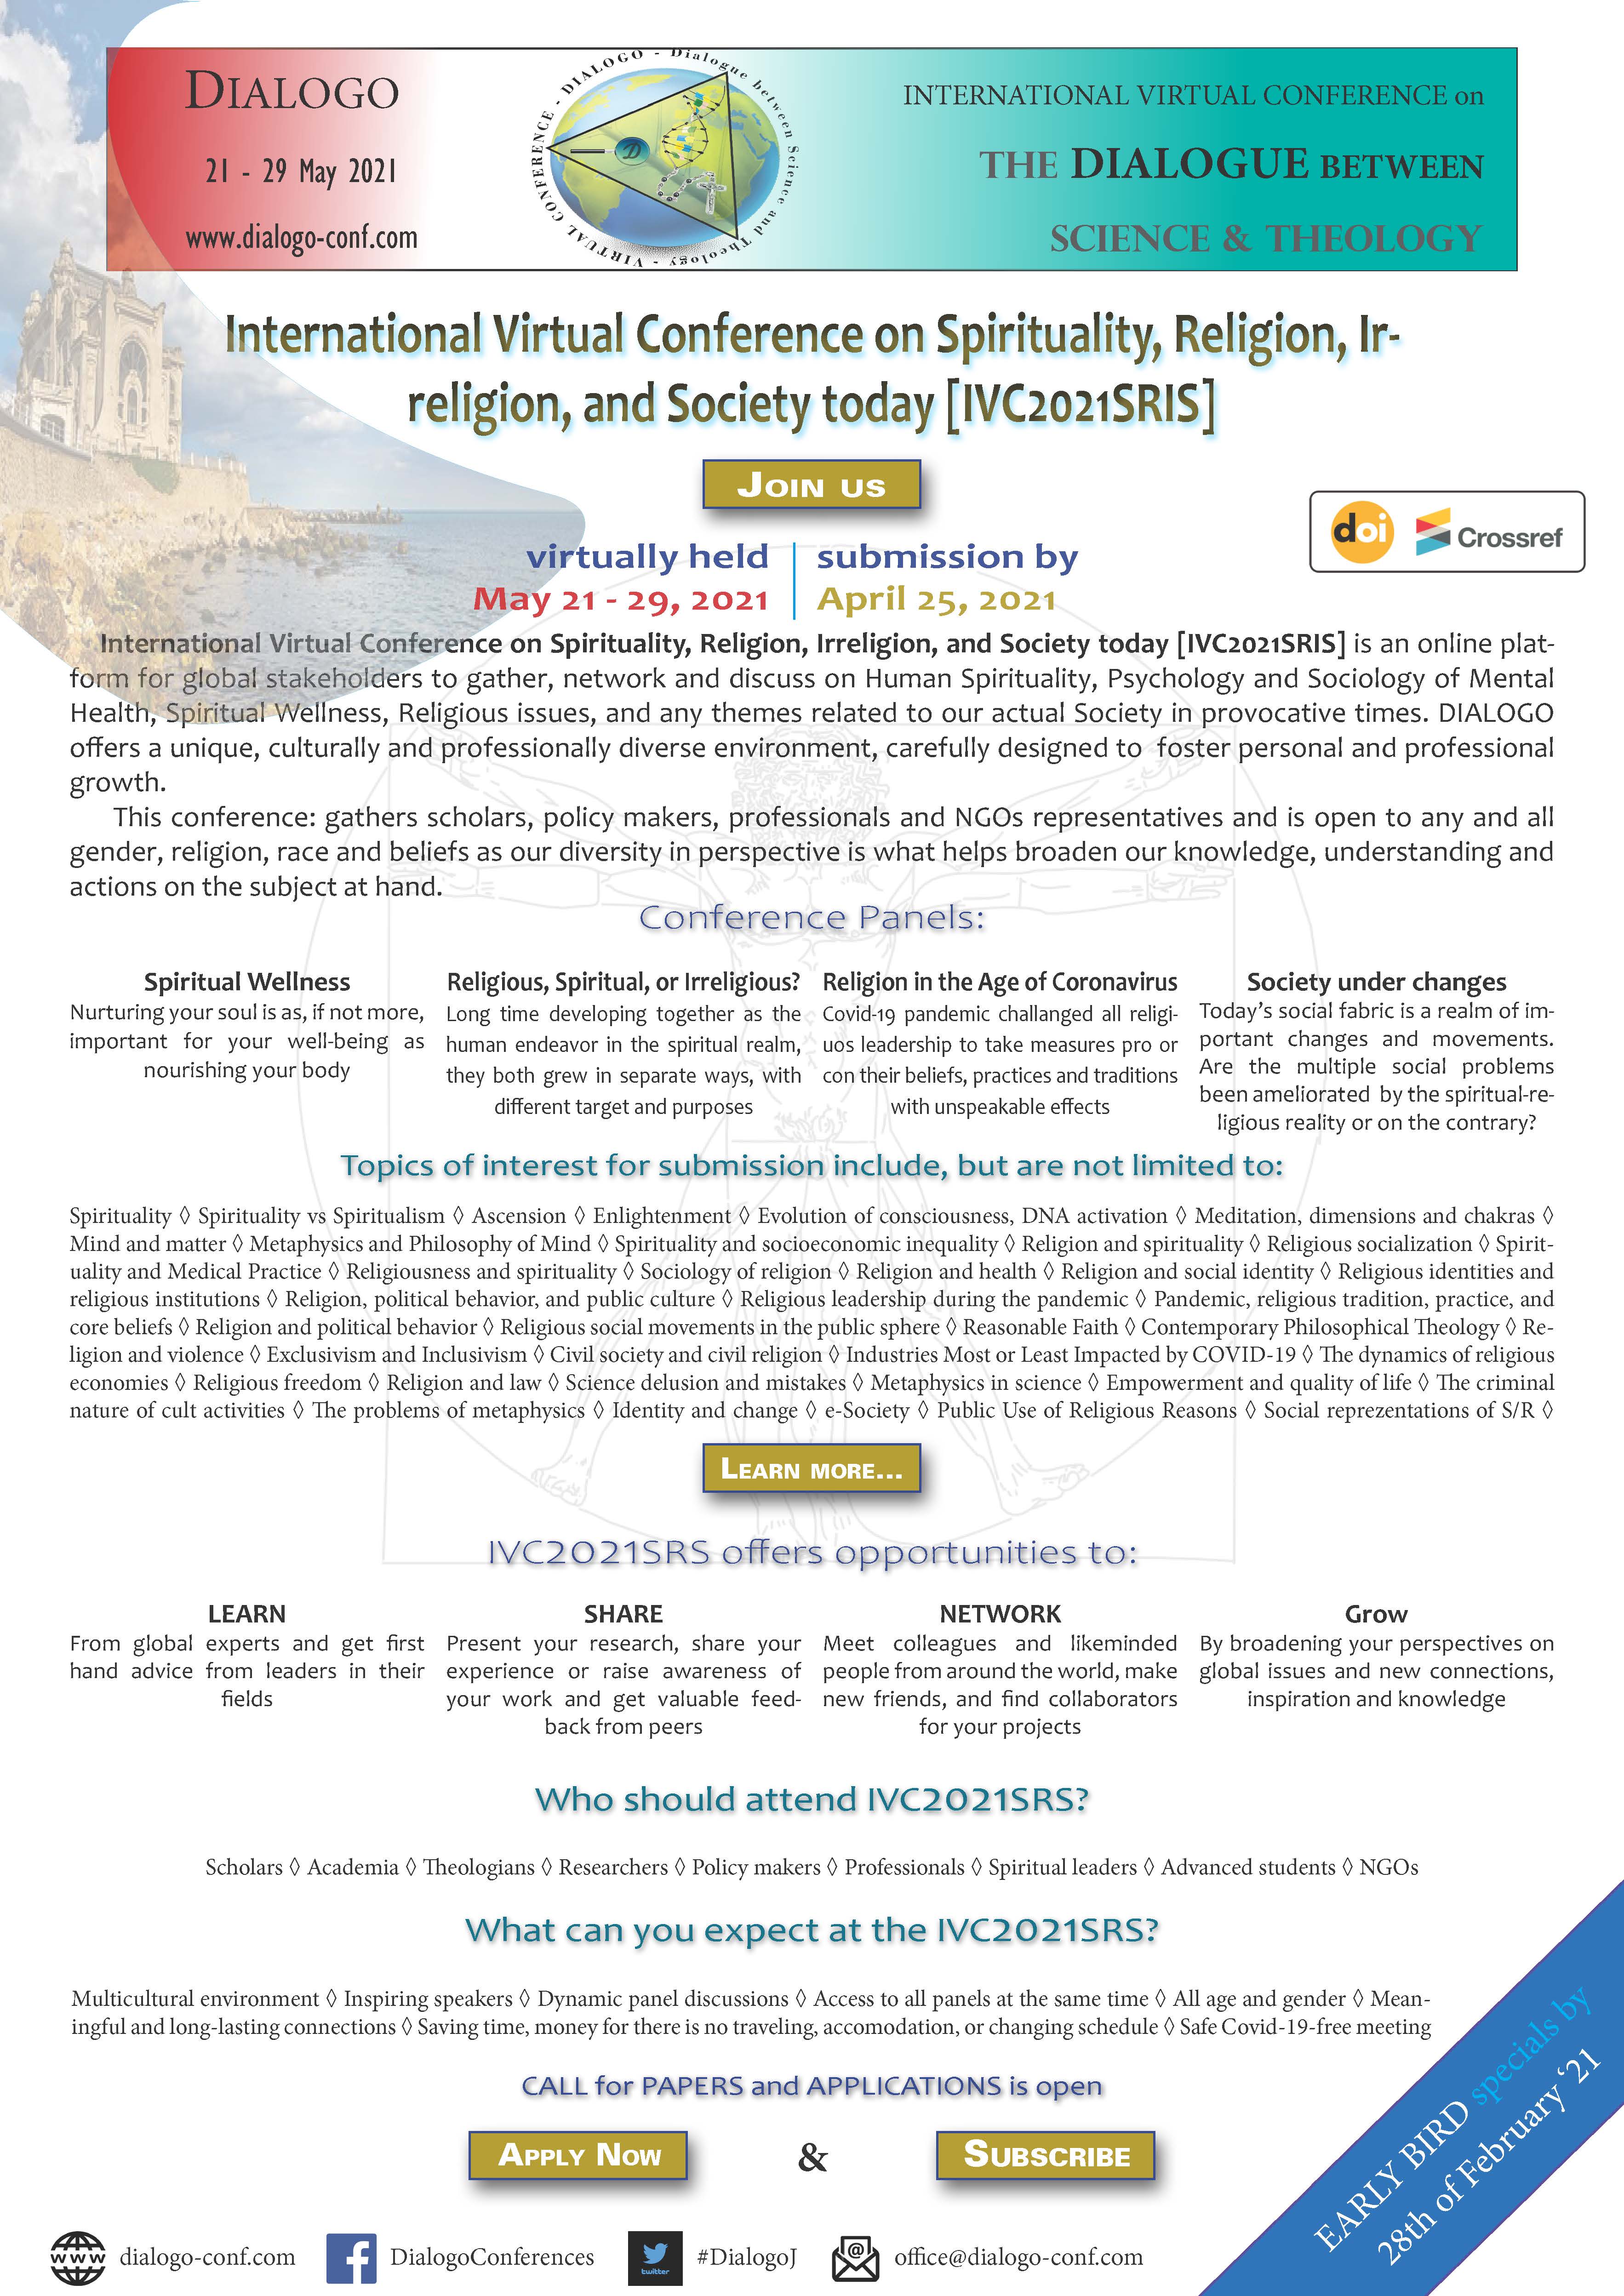 International Virtual Conference on Spirituality, Religion, Irreligion, and Society today